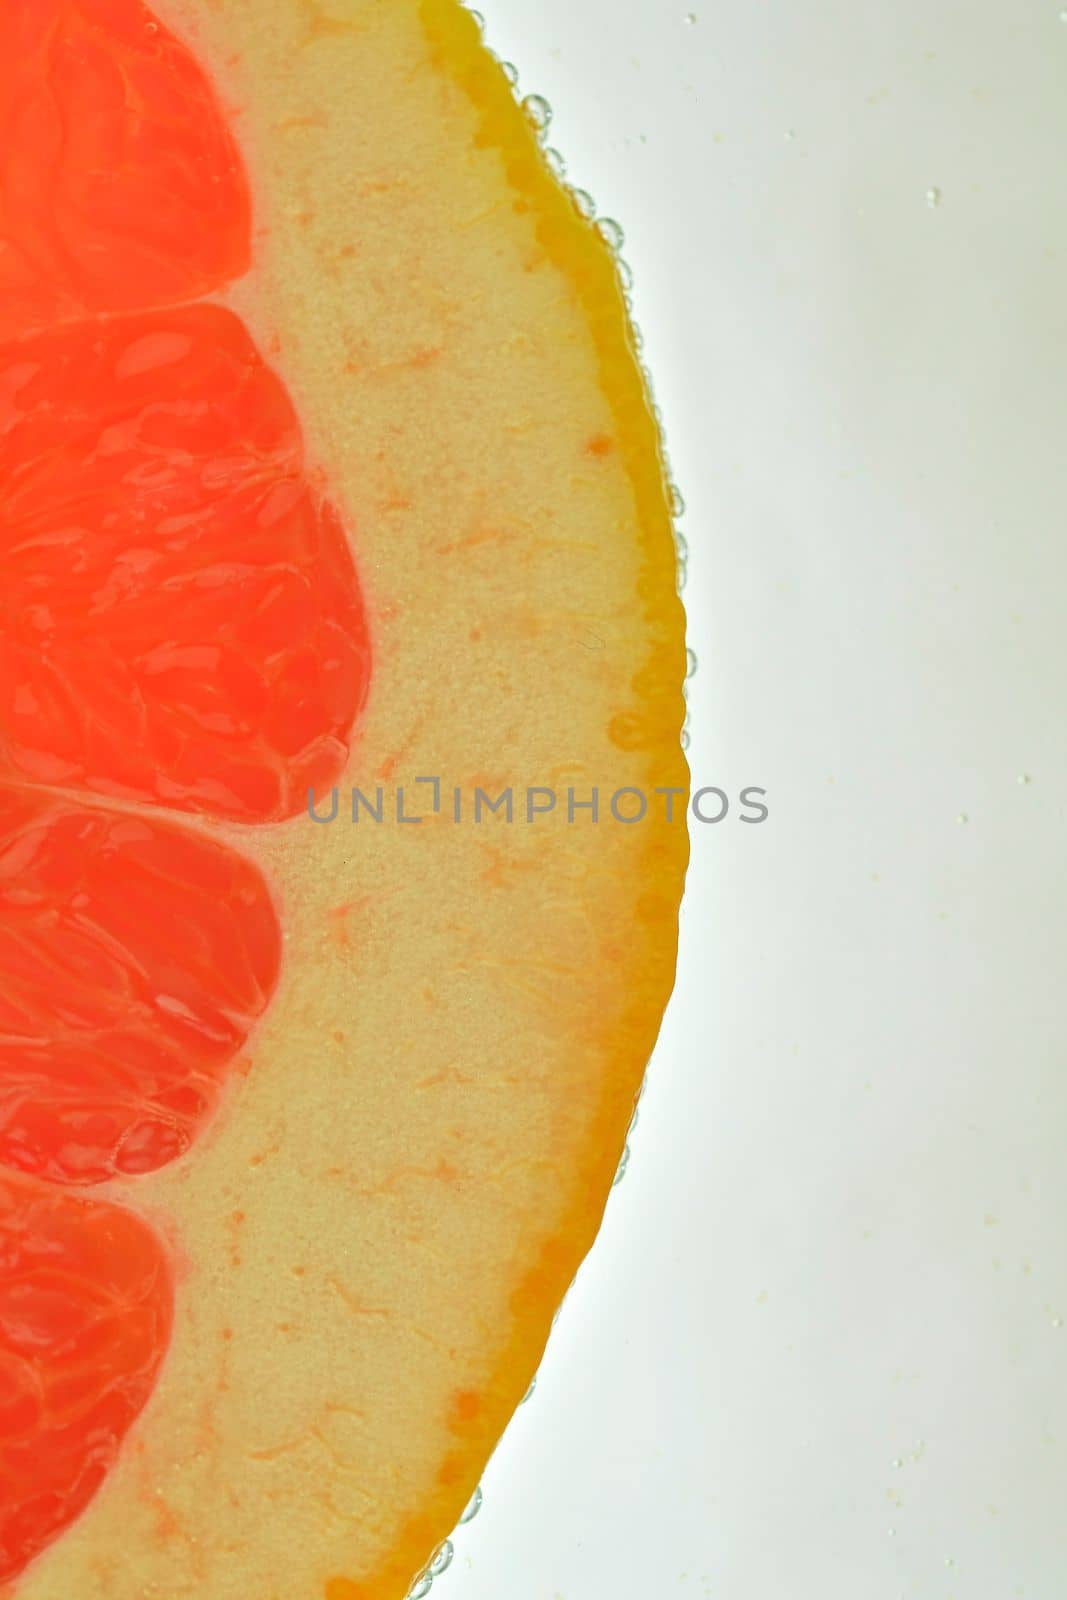 Fresh organic grapefruit slice on white background. Grapefruit close-up. Slice of blood red ripe grapefruit. Texture of red juicy grapefruit. Macro verical image.